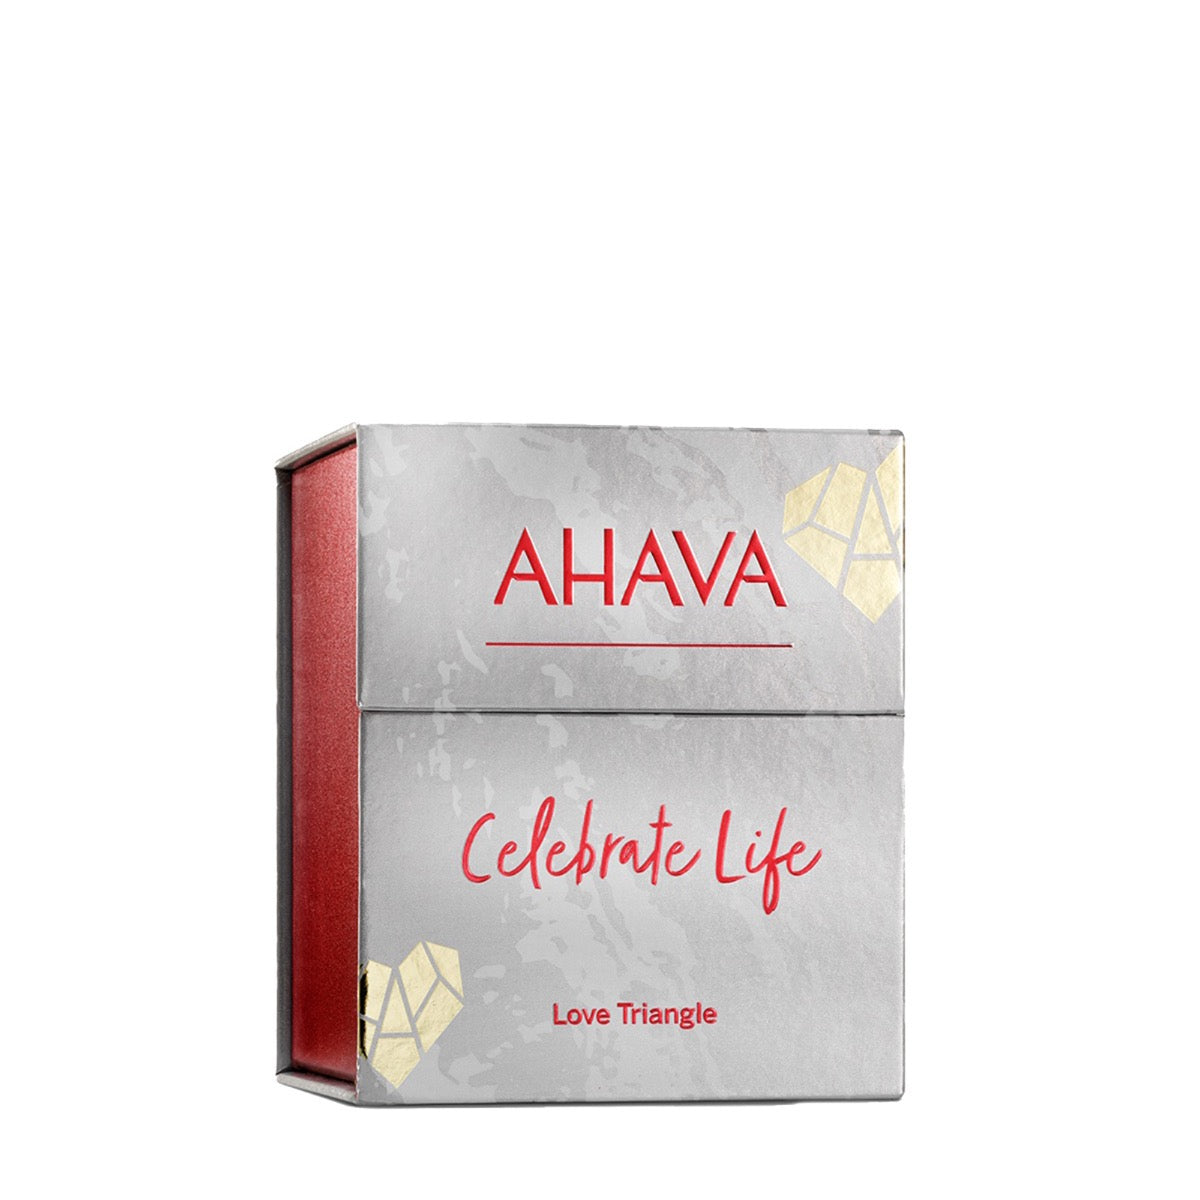 Ahava Celebrate Life Love Triangle Gift Set